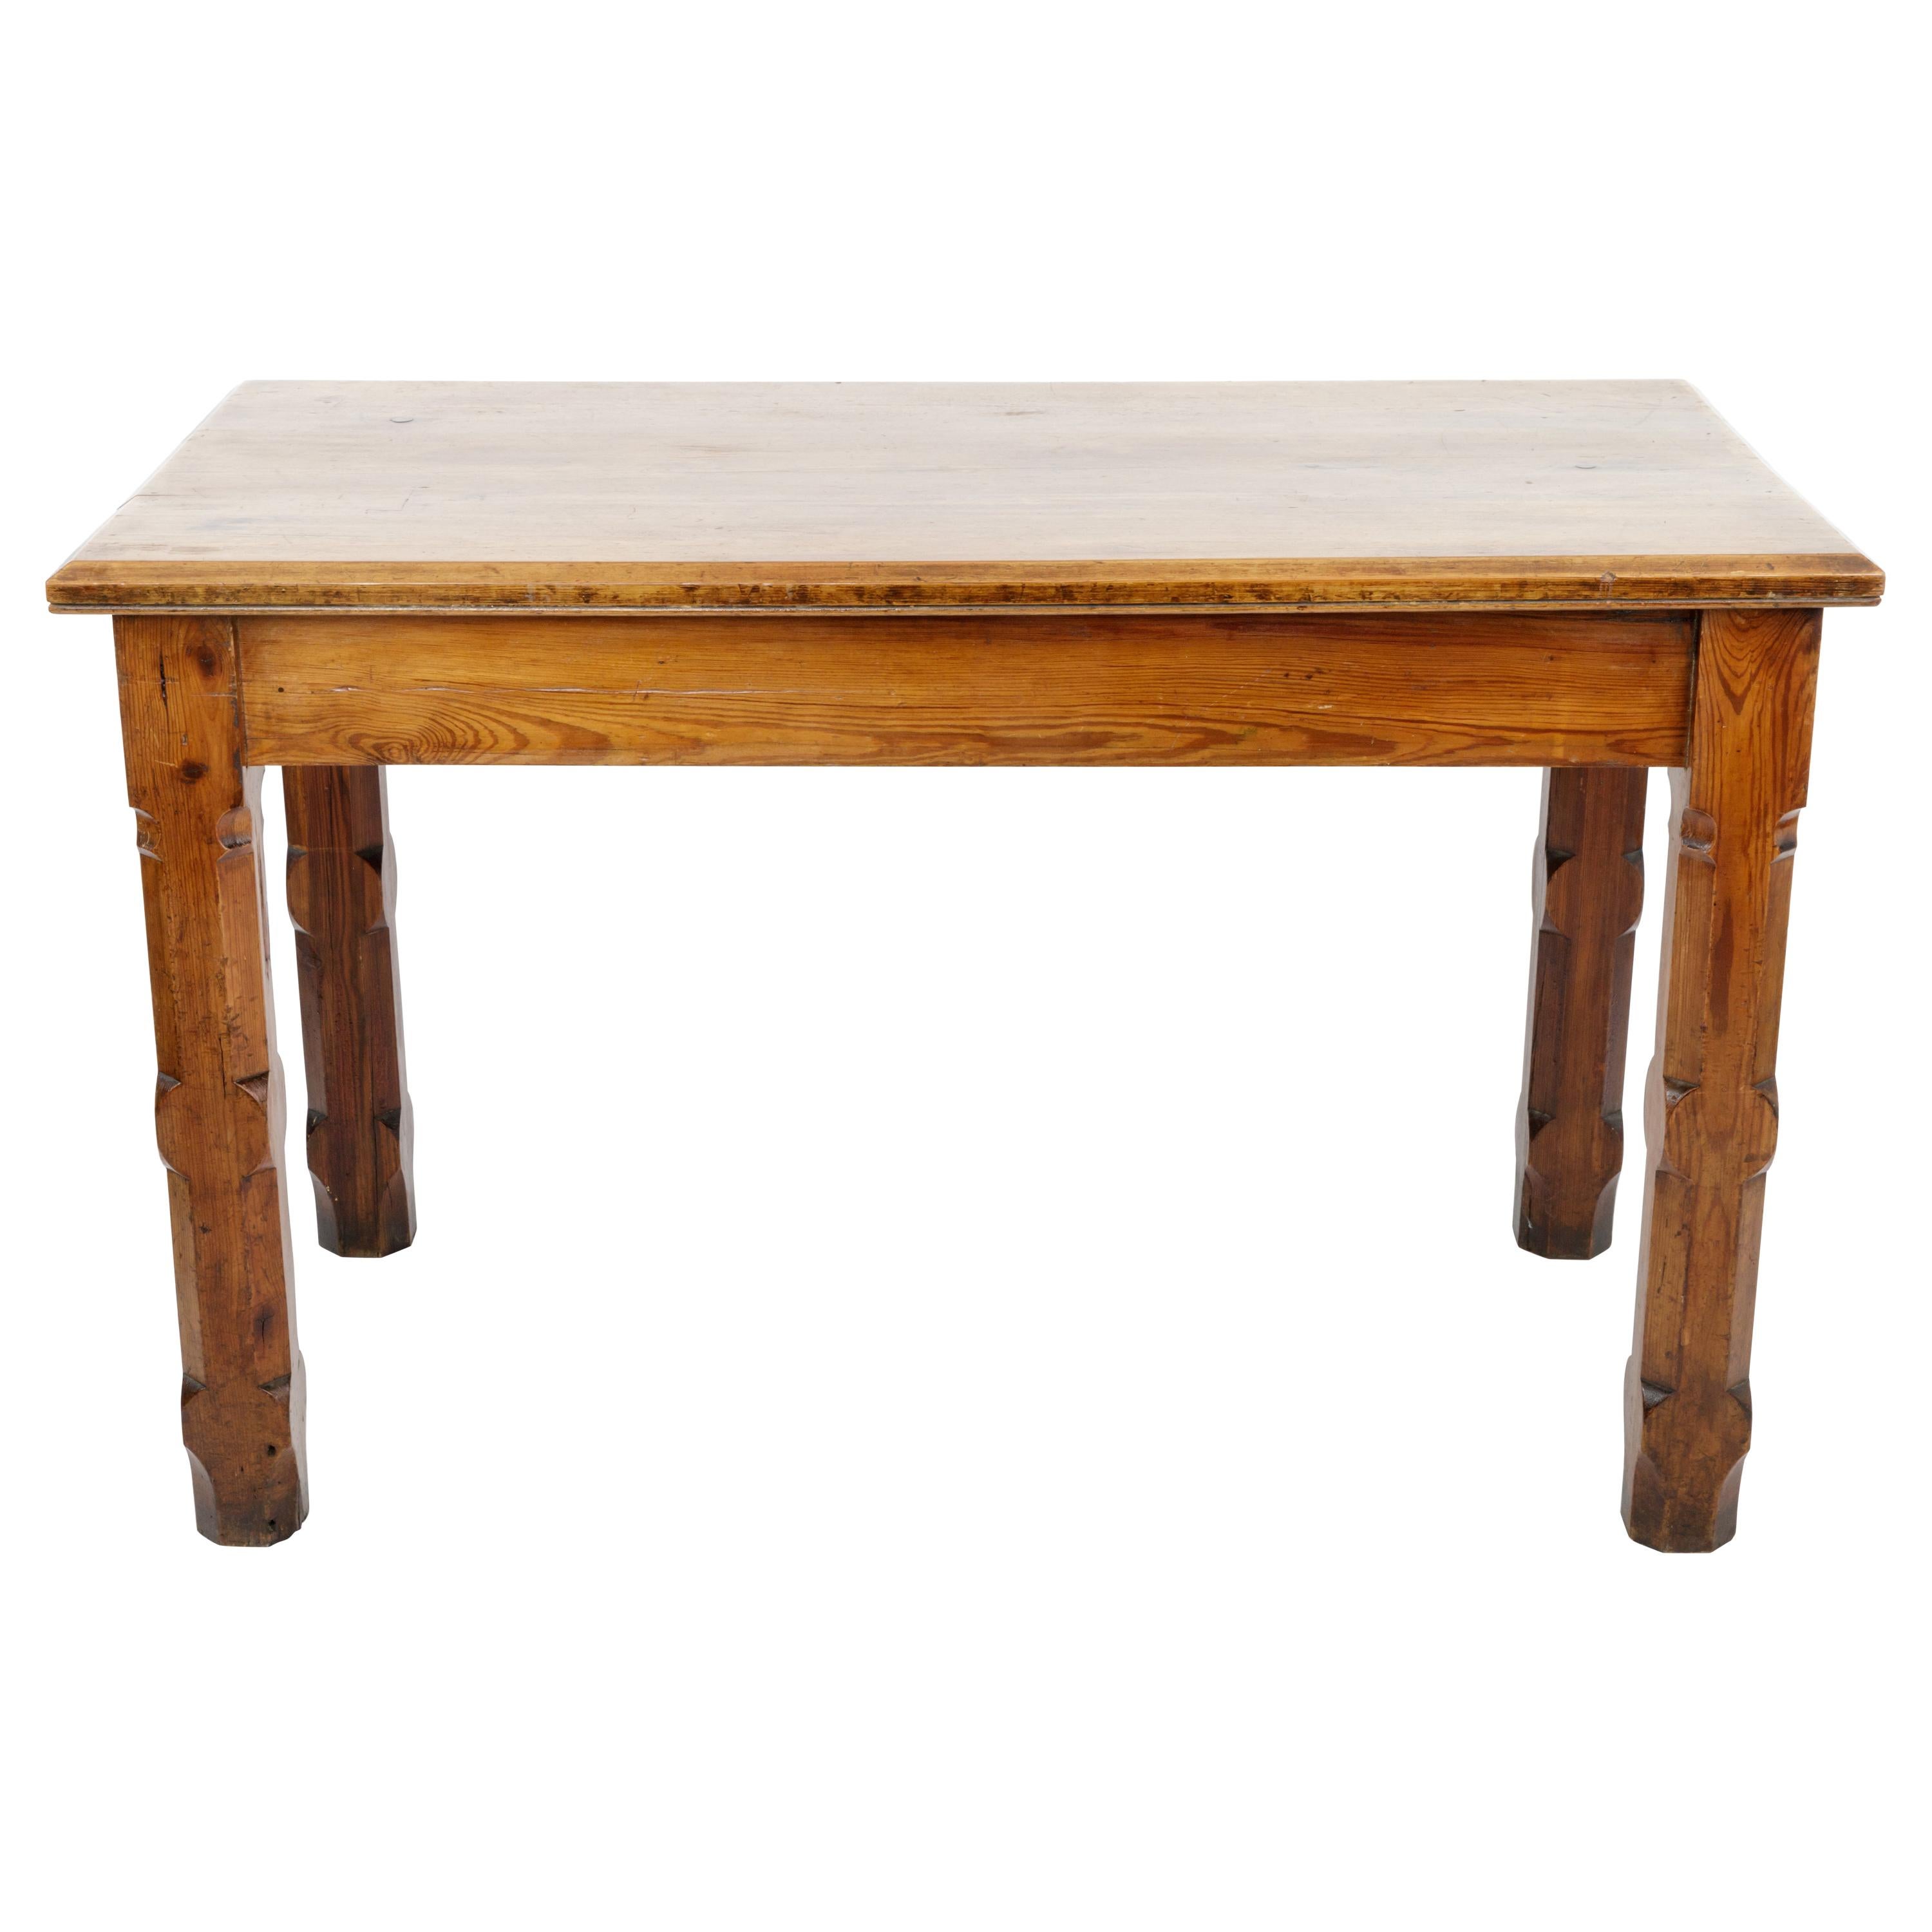 19th Century Pugin Style English Pine Table